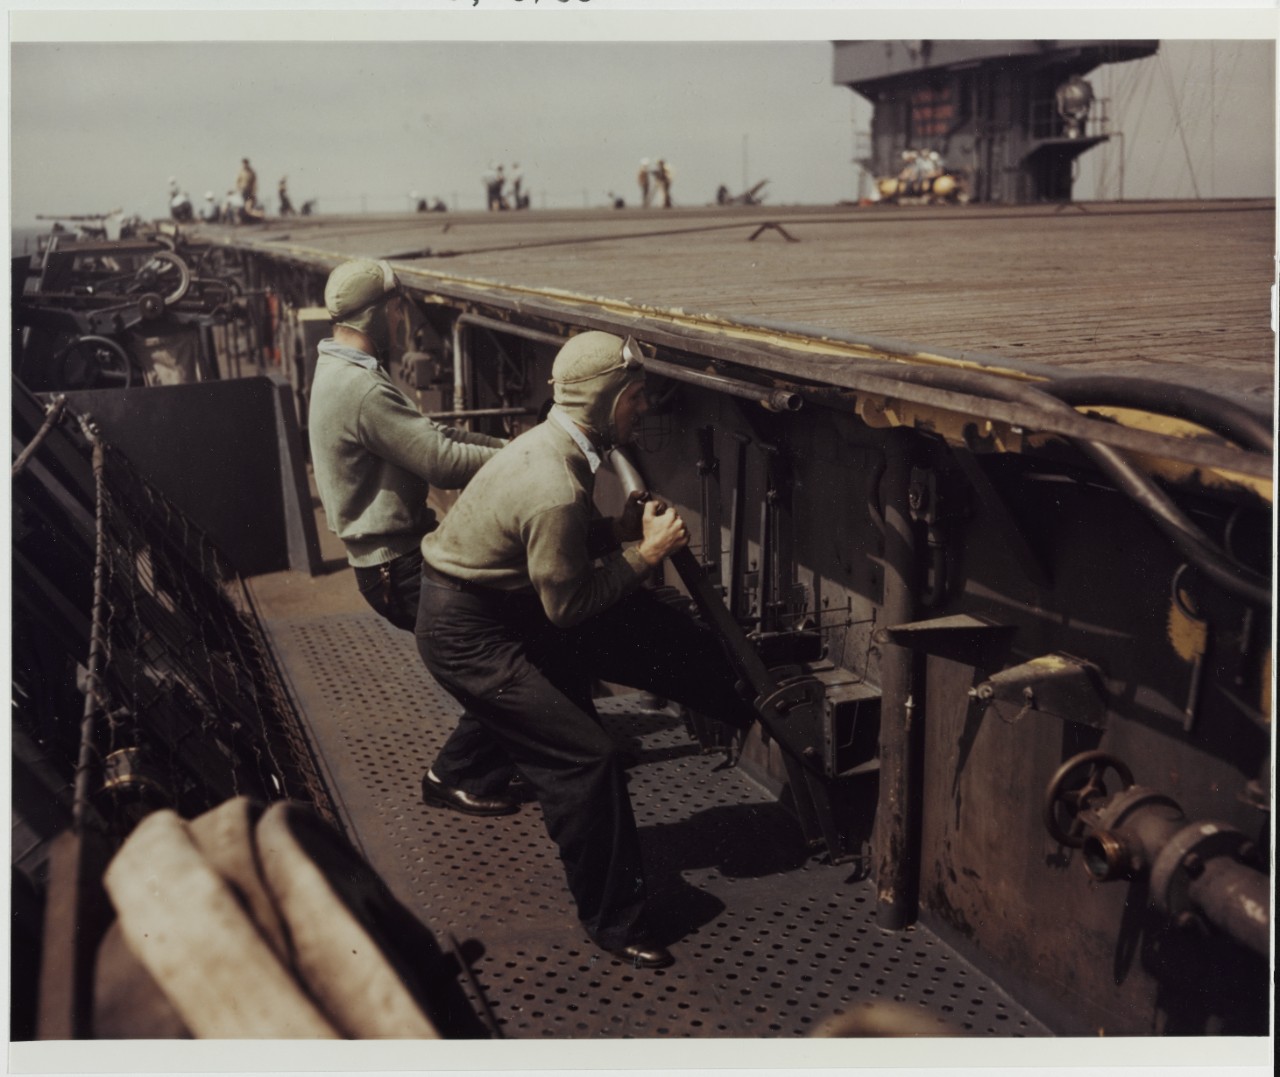 Arresting Gear Crewmen pull levers, circa 1943-1945